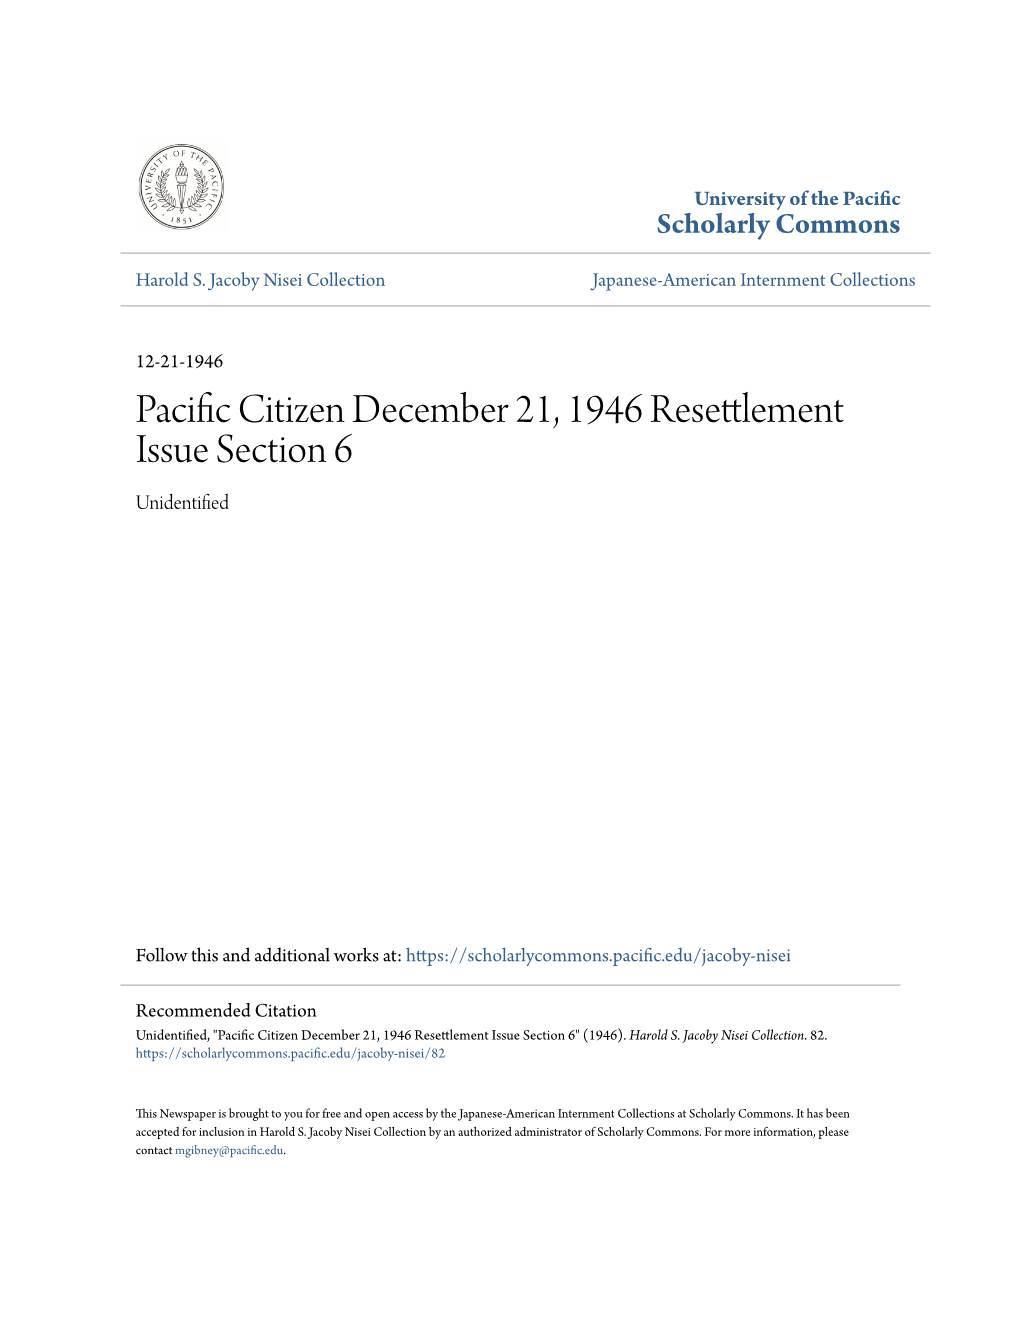 Pacific Citizen December 21, 1946 Resettlement Issue Section 6